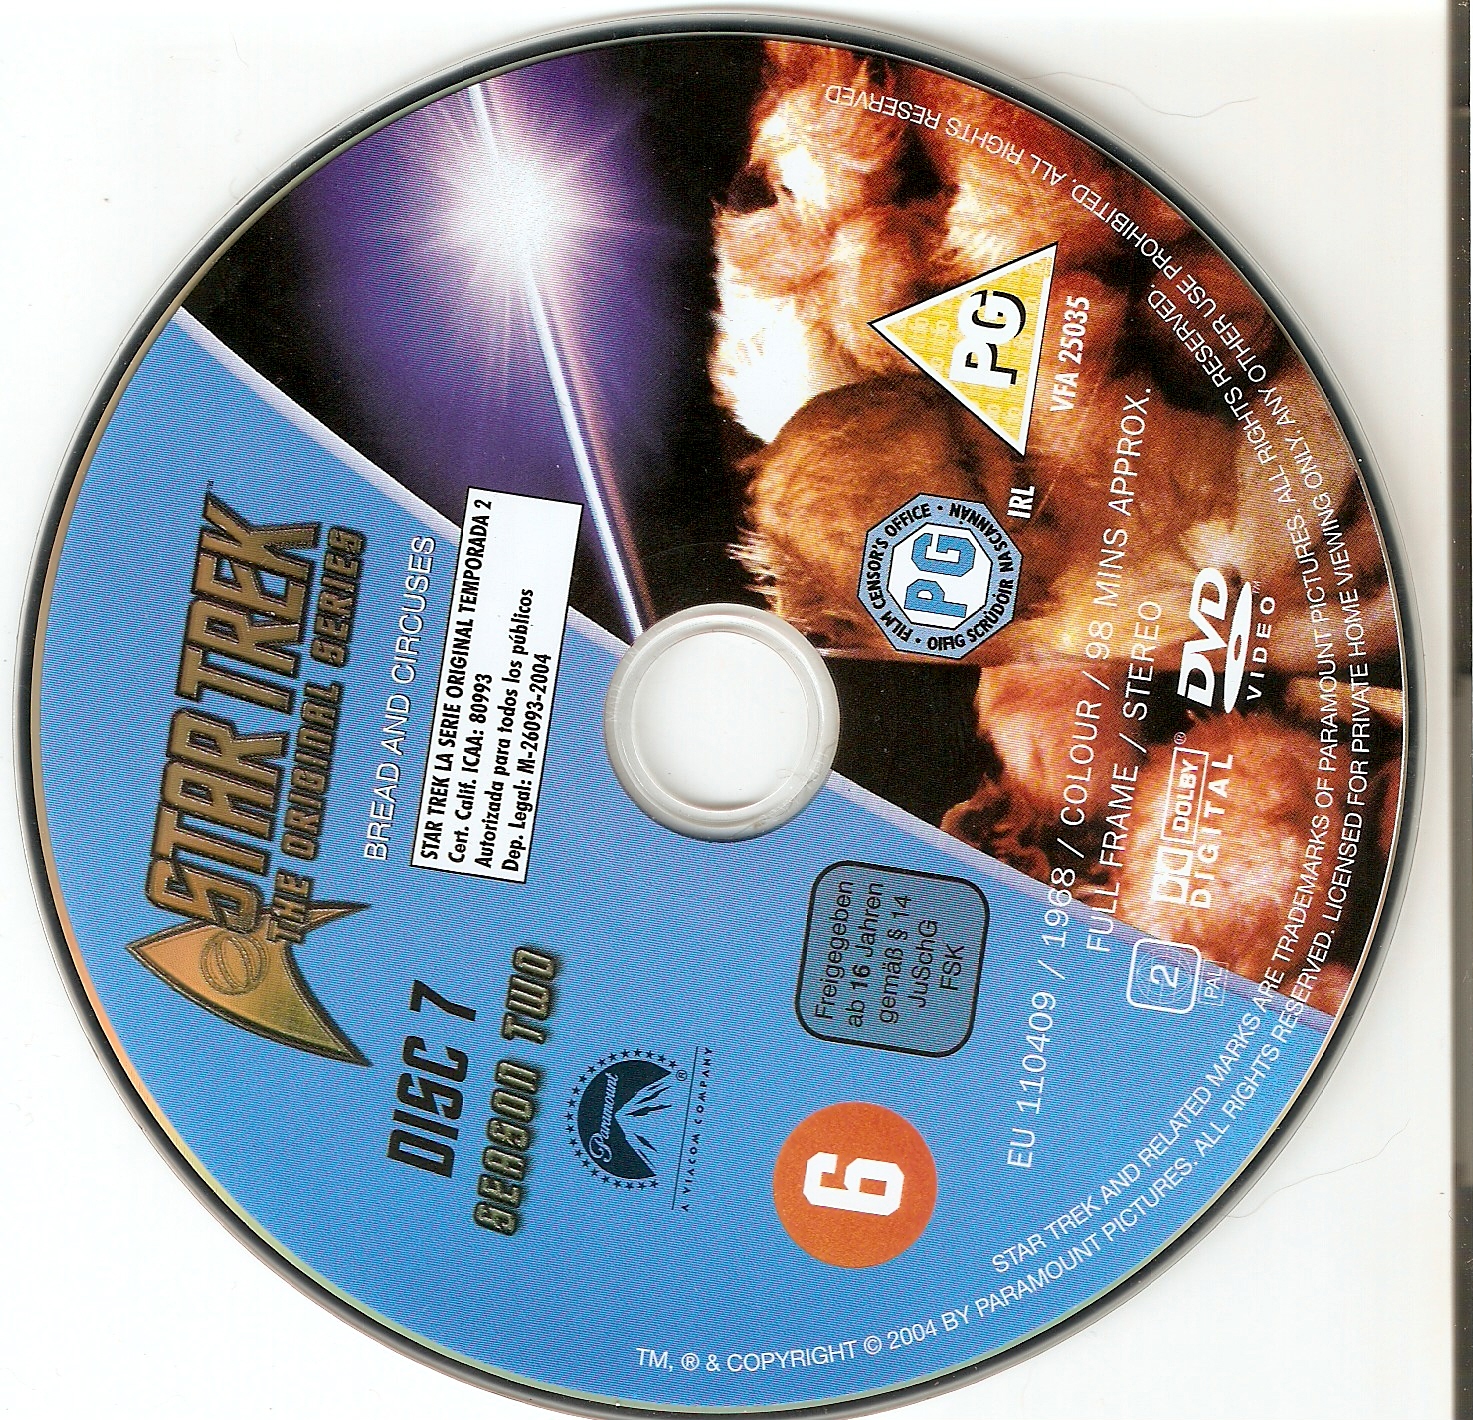 Star trek saison 2 DVD 7